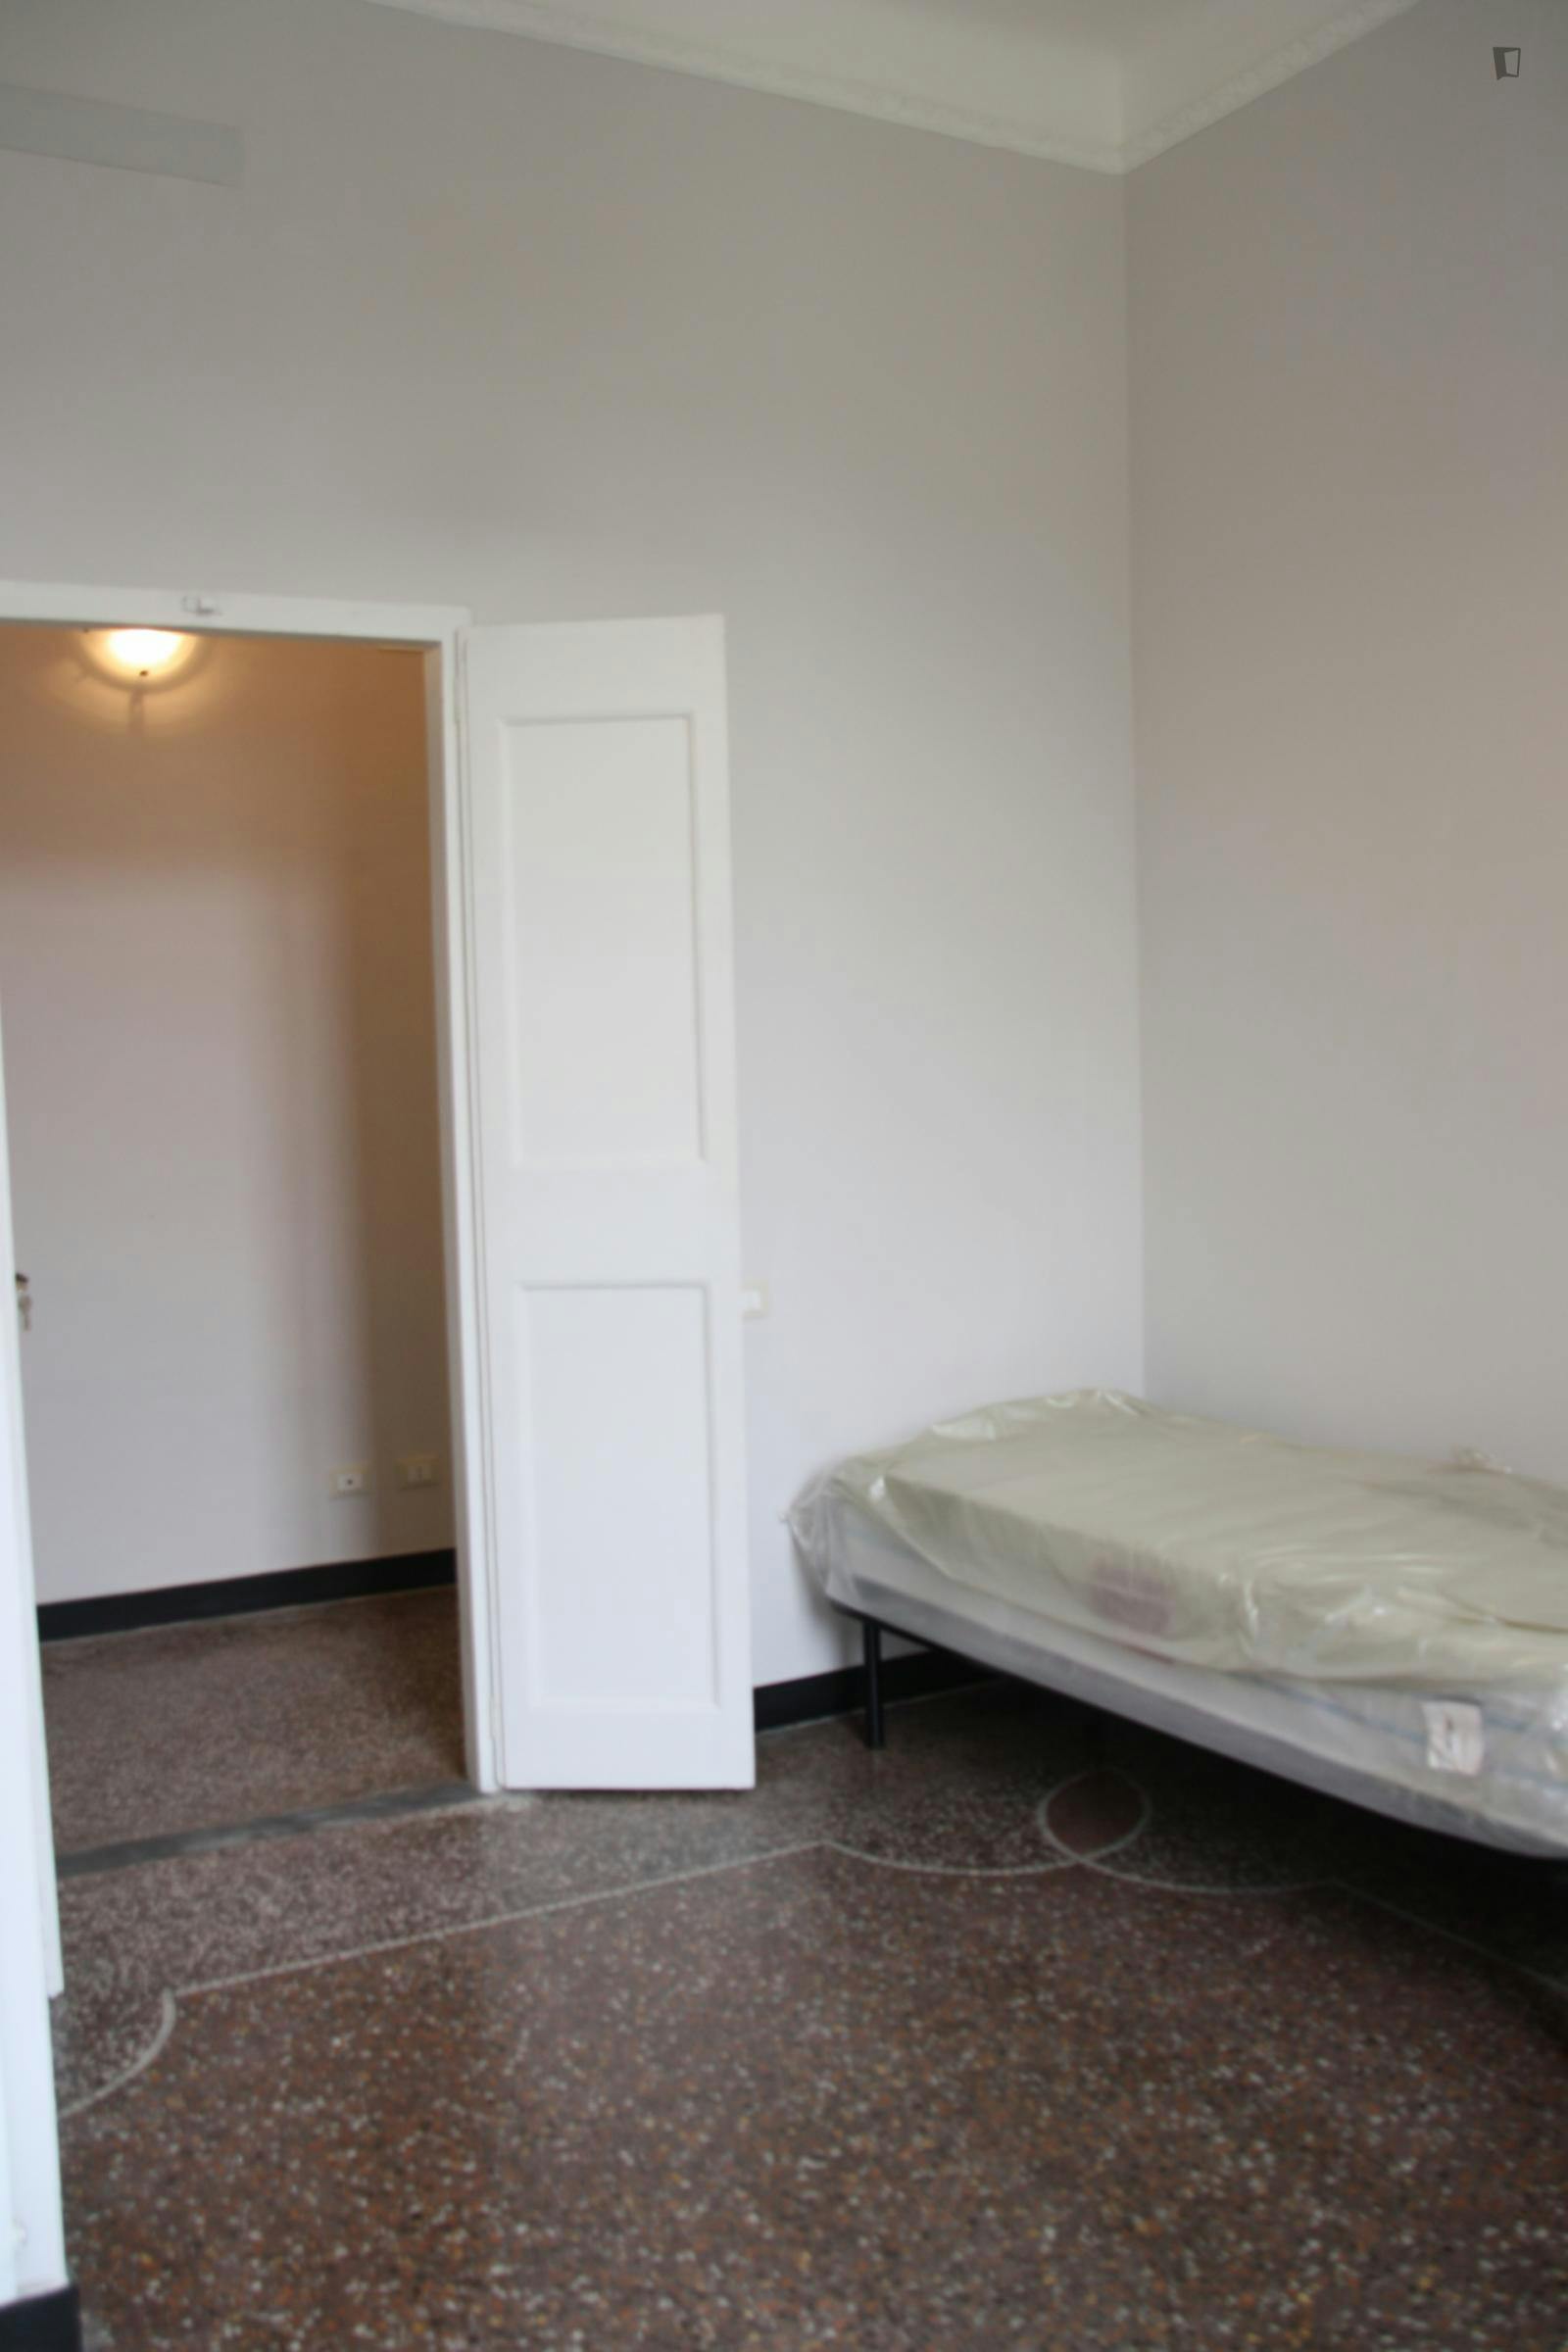 New single bedroom near Darsena metro station